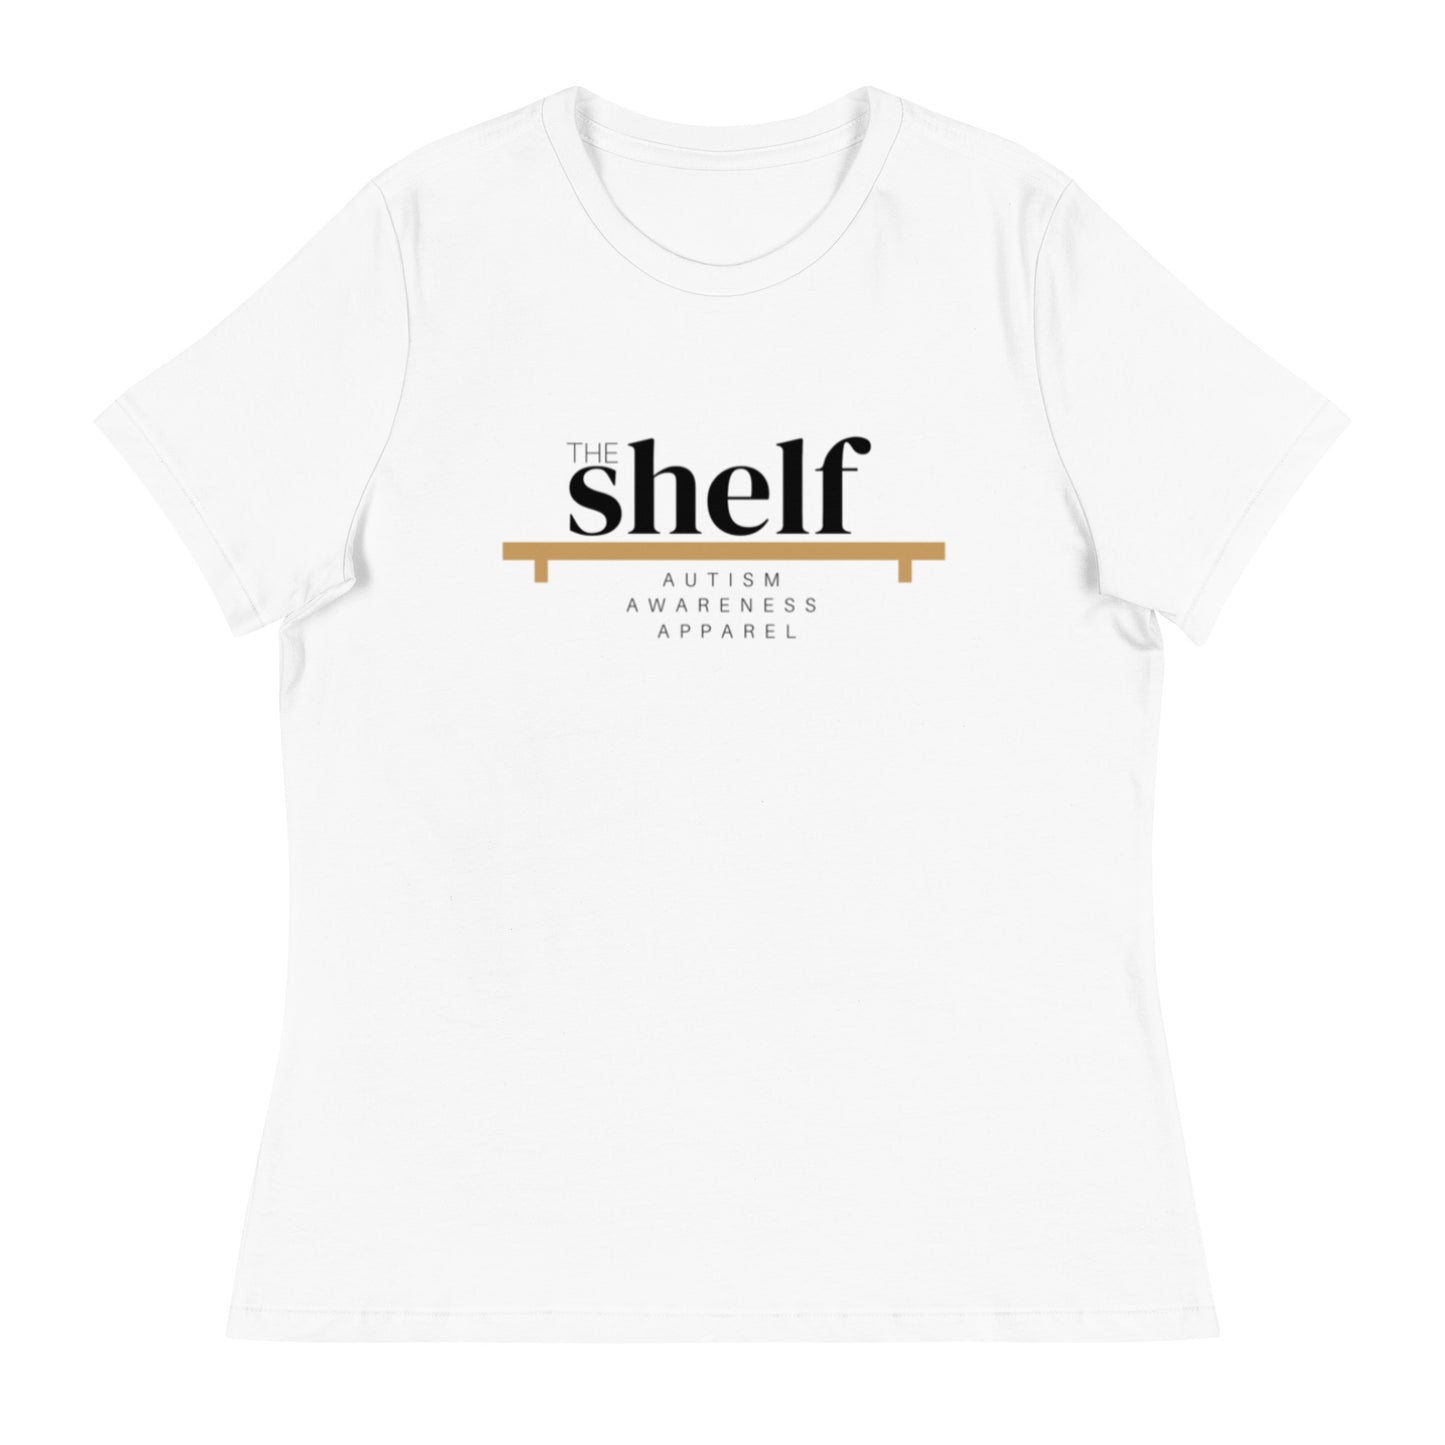 The Shelf Women's Relaxed T-Shirt